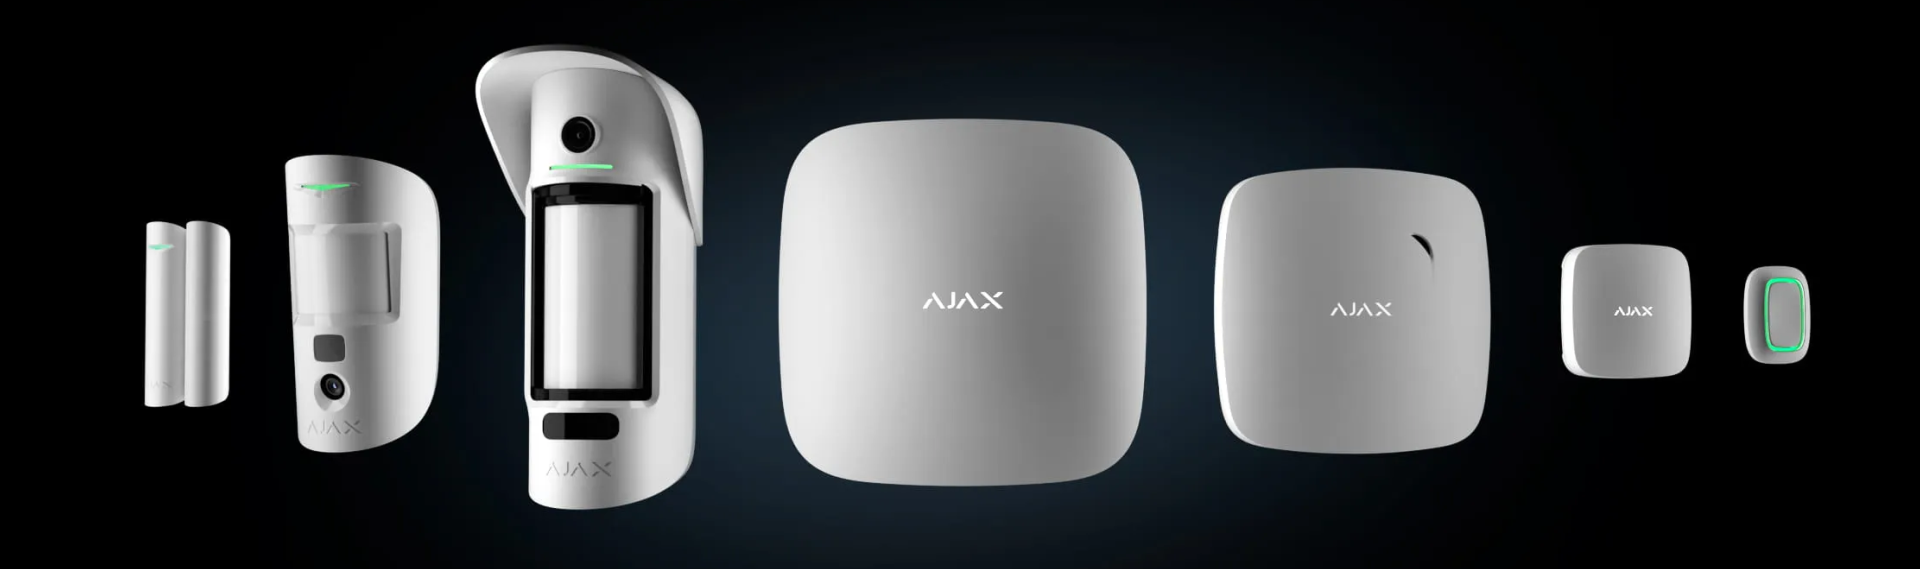 Ajax Alarm Systems - Now Available from SDA!